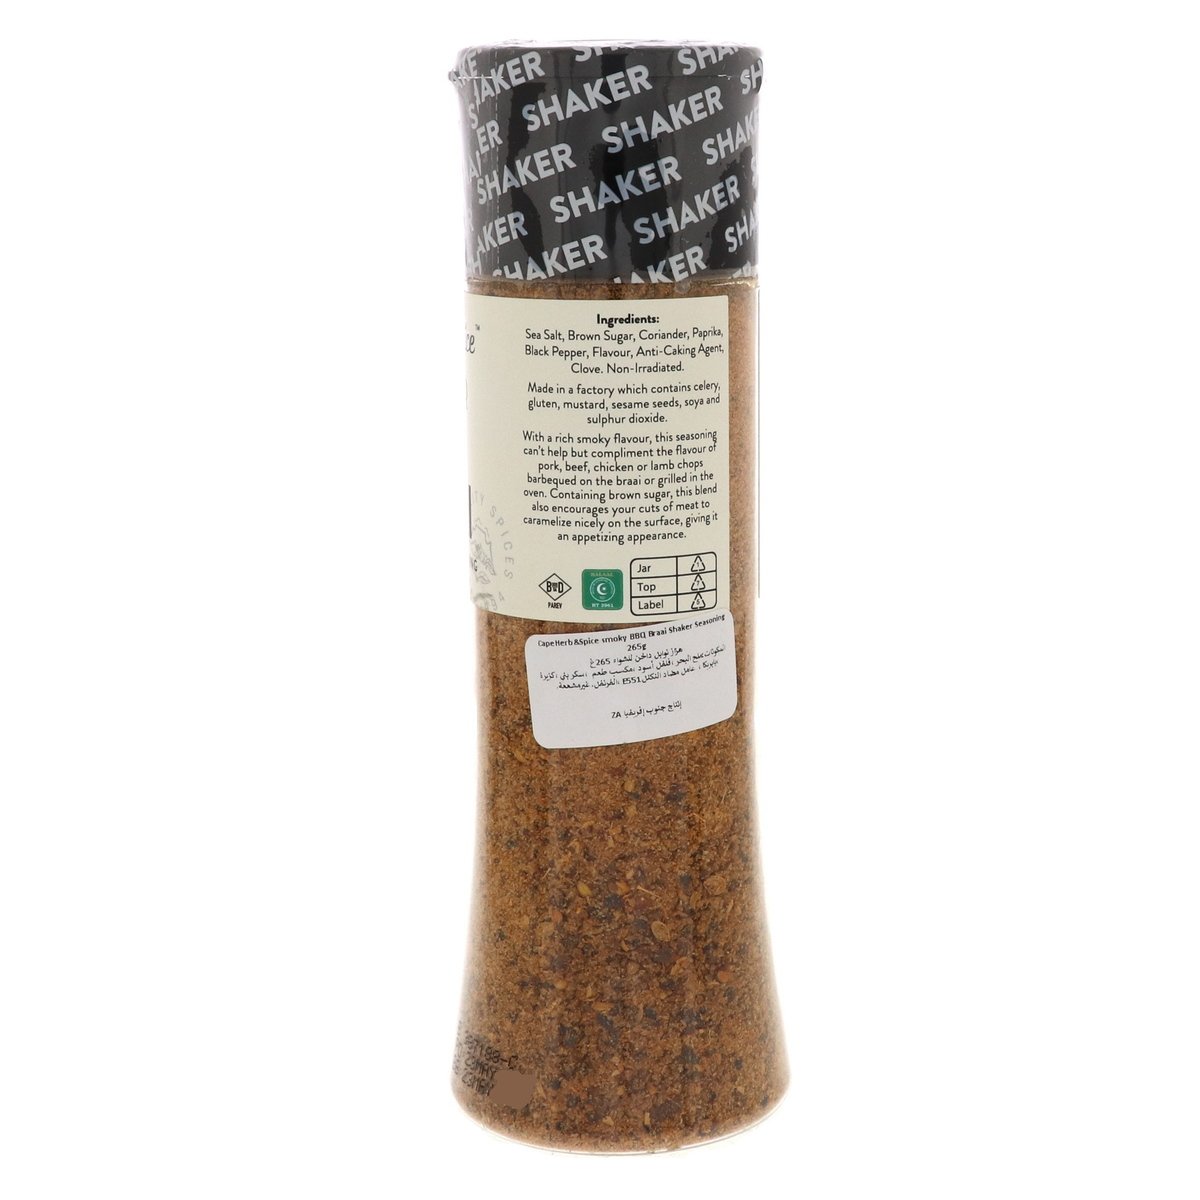 Cape Herb & Spice Smoky BBQ Braai Shaker Seasoning 265 g